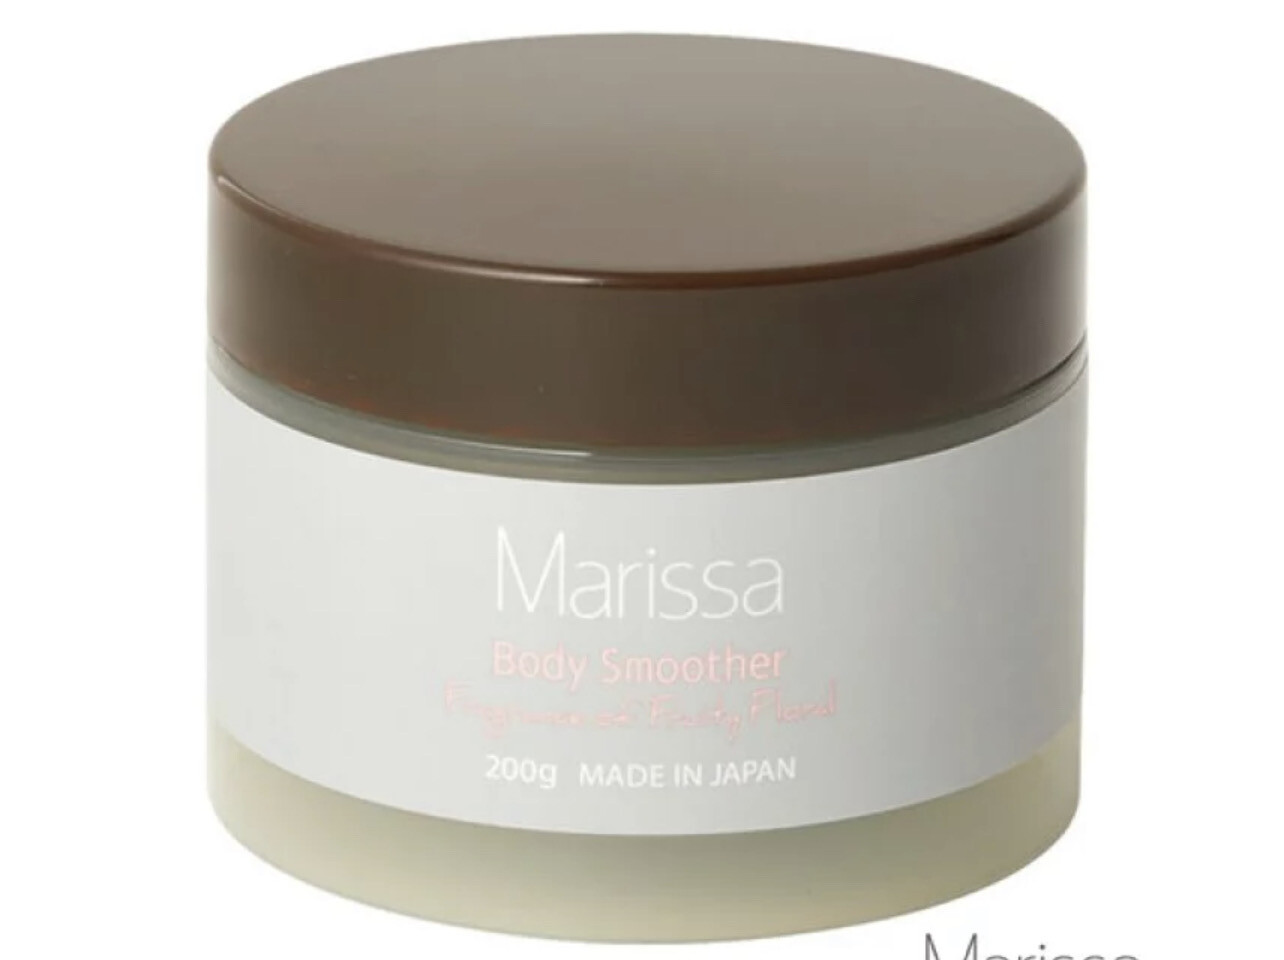 Marissa Marissa body smoother скраб для тела цветочно-фруктовый аромат 